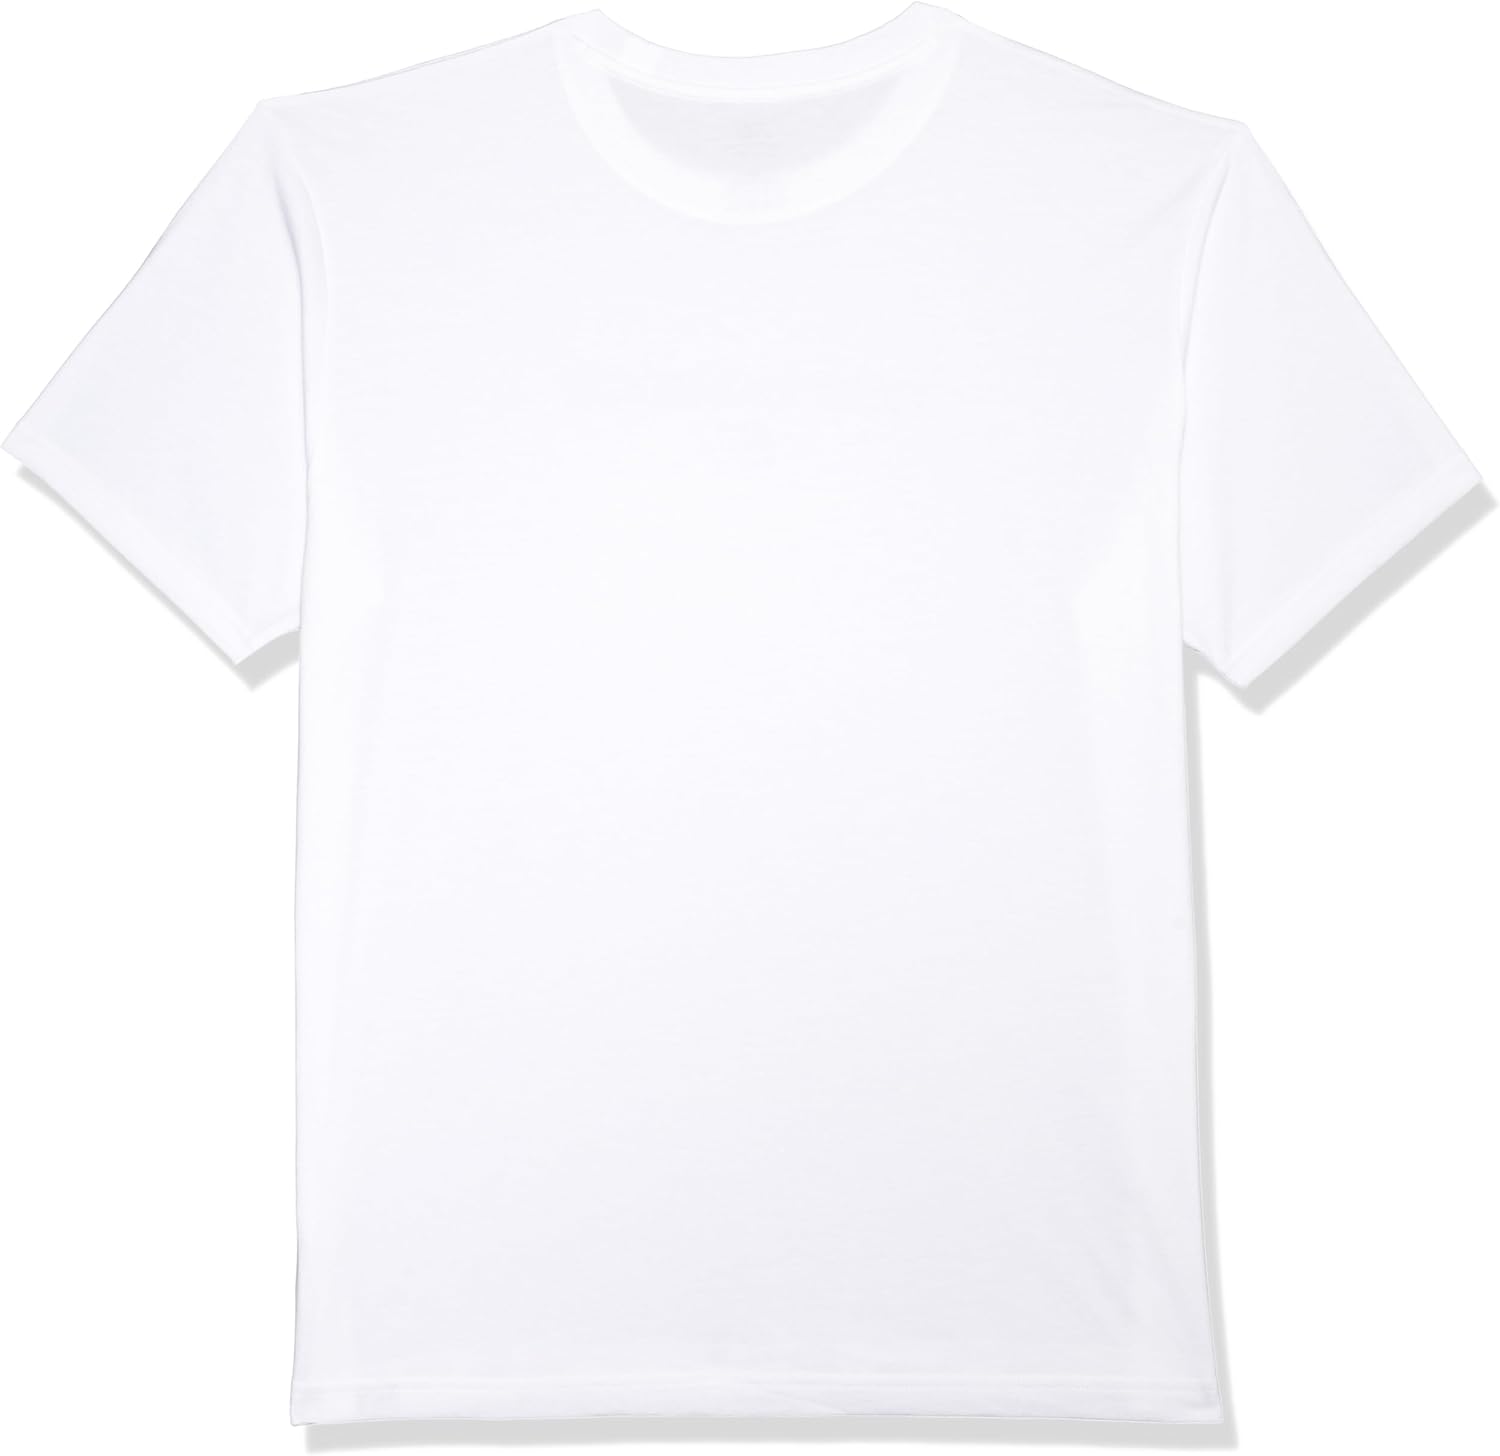 New Balance Mens NB Sport Seasonal Graphic Brand T-Shirt T-Shirt